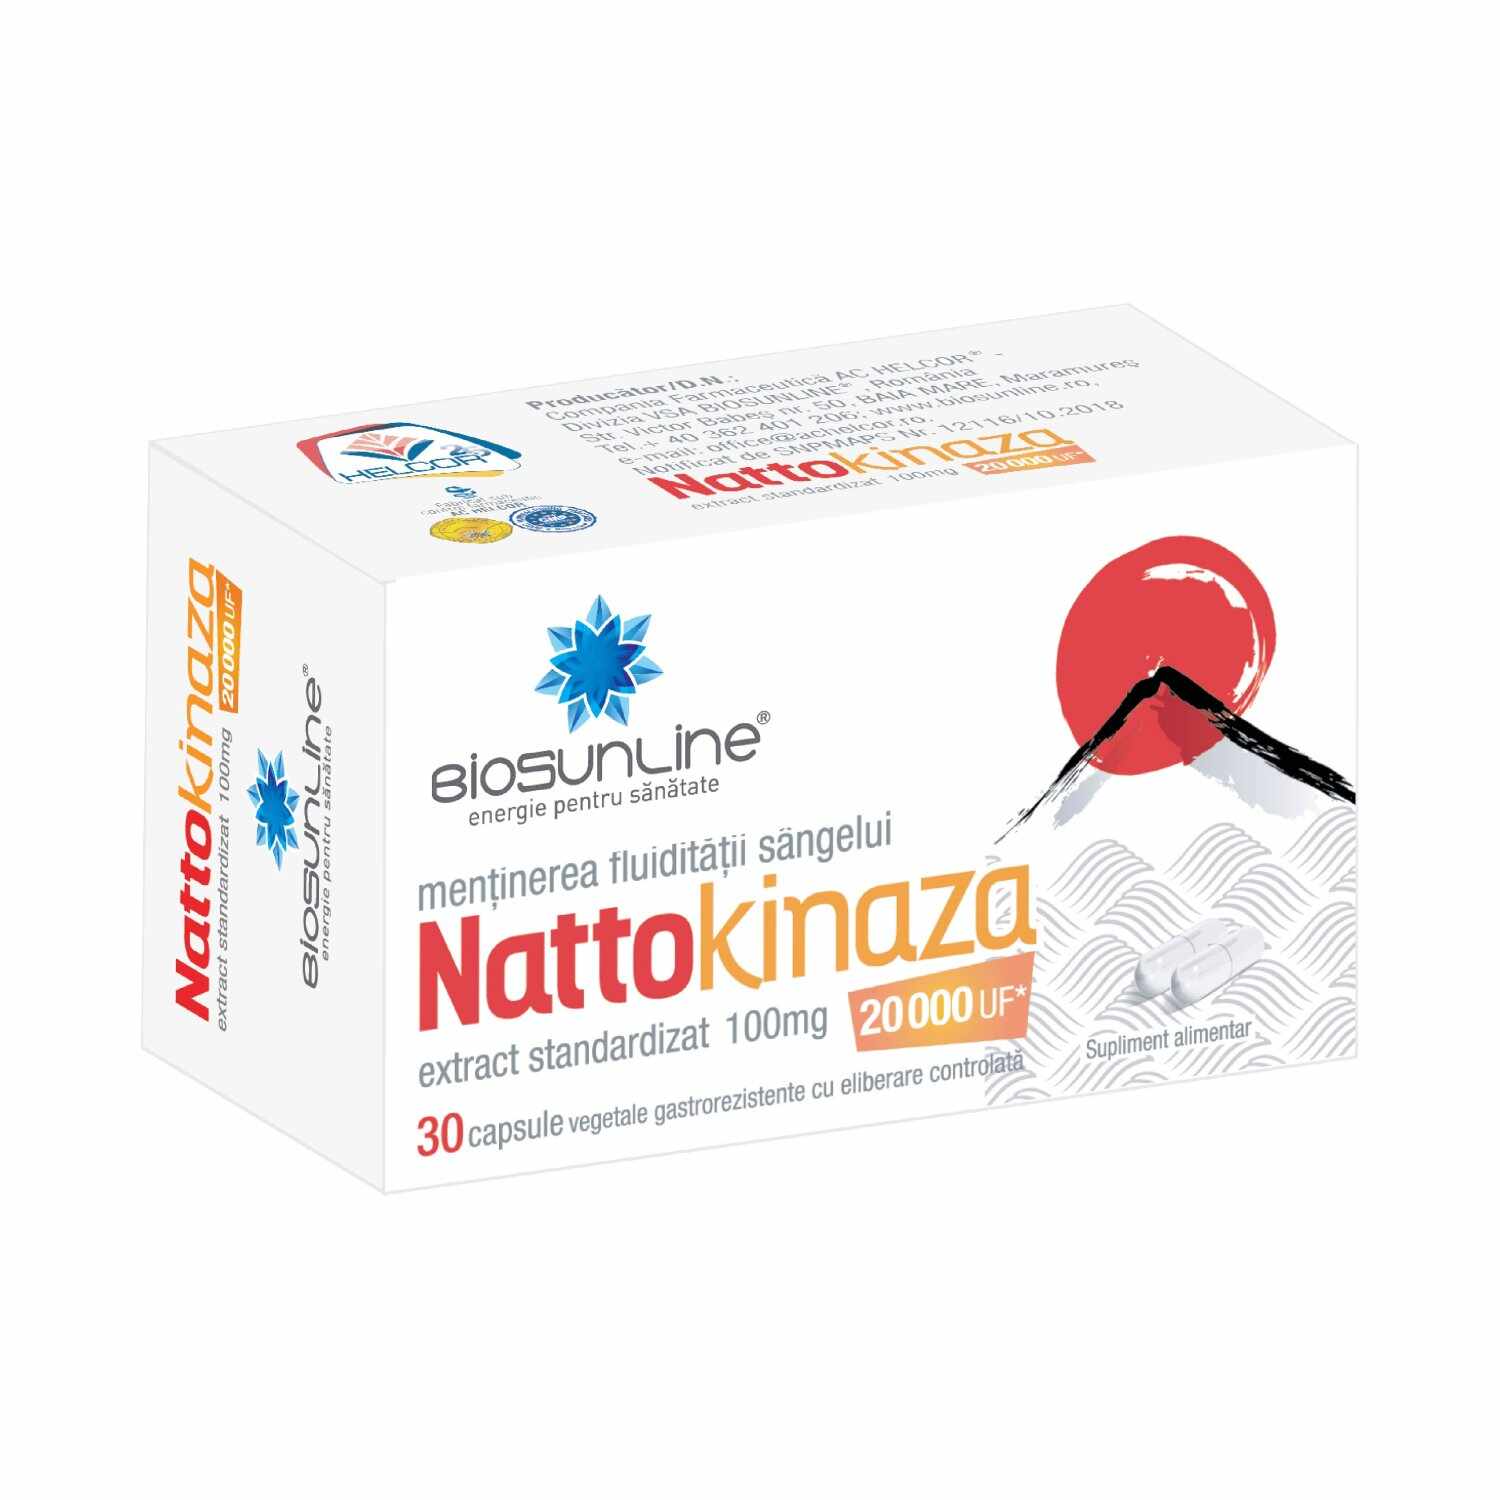 NATTOKINAZĂ 100 mg, BioSunLine, 30 capsule gastrorezistente